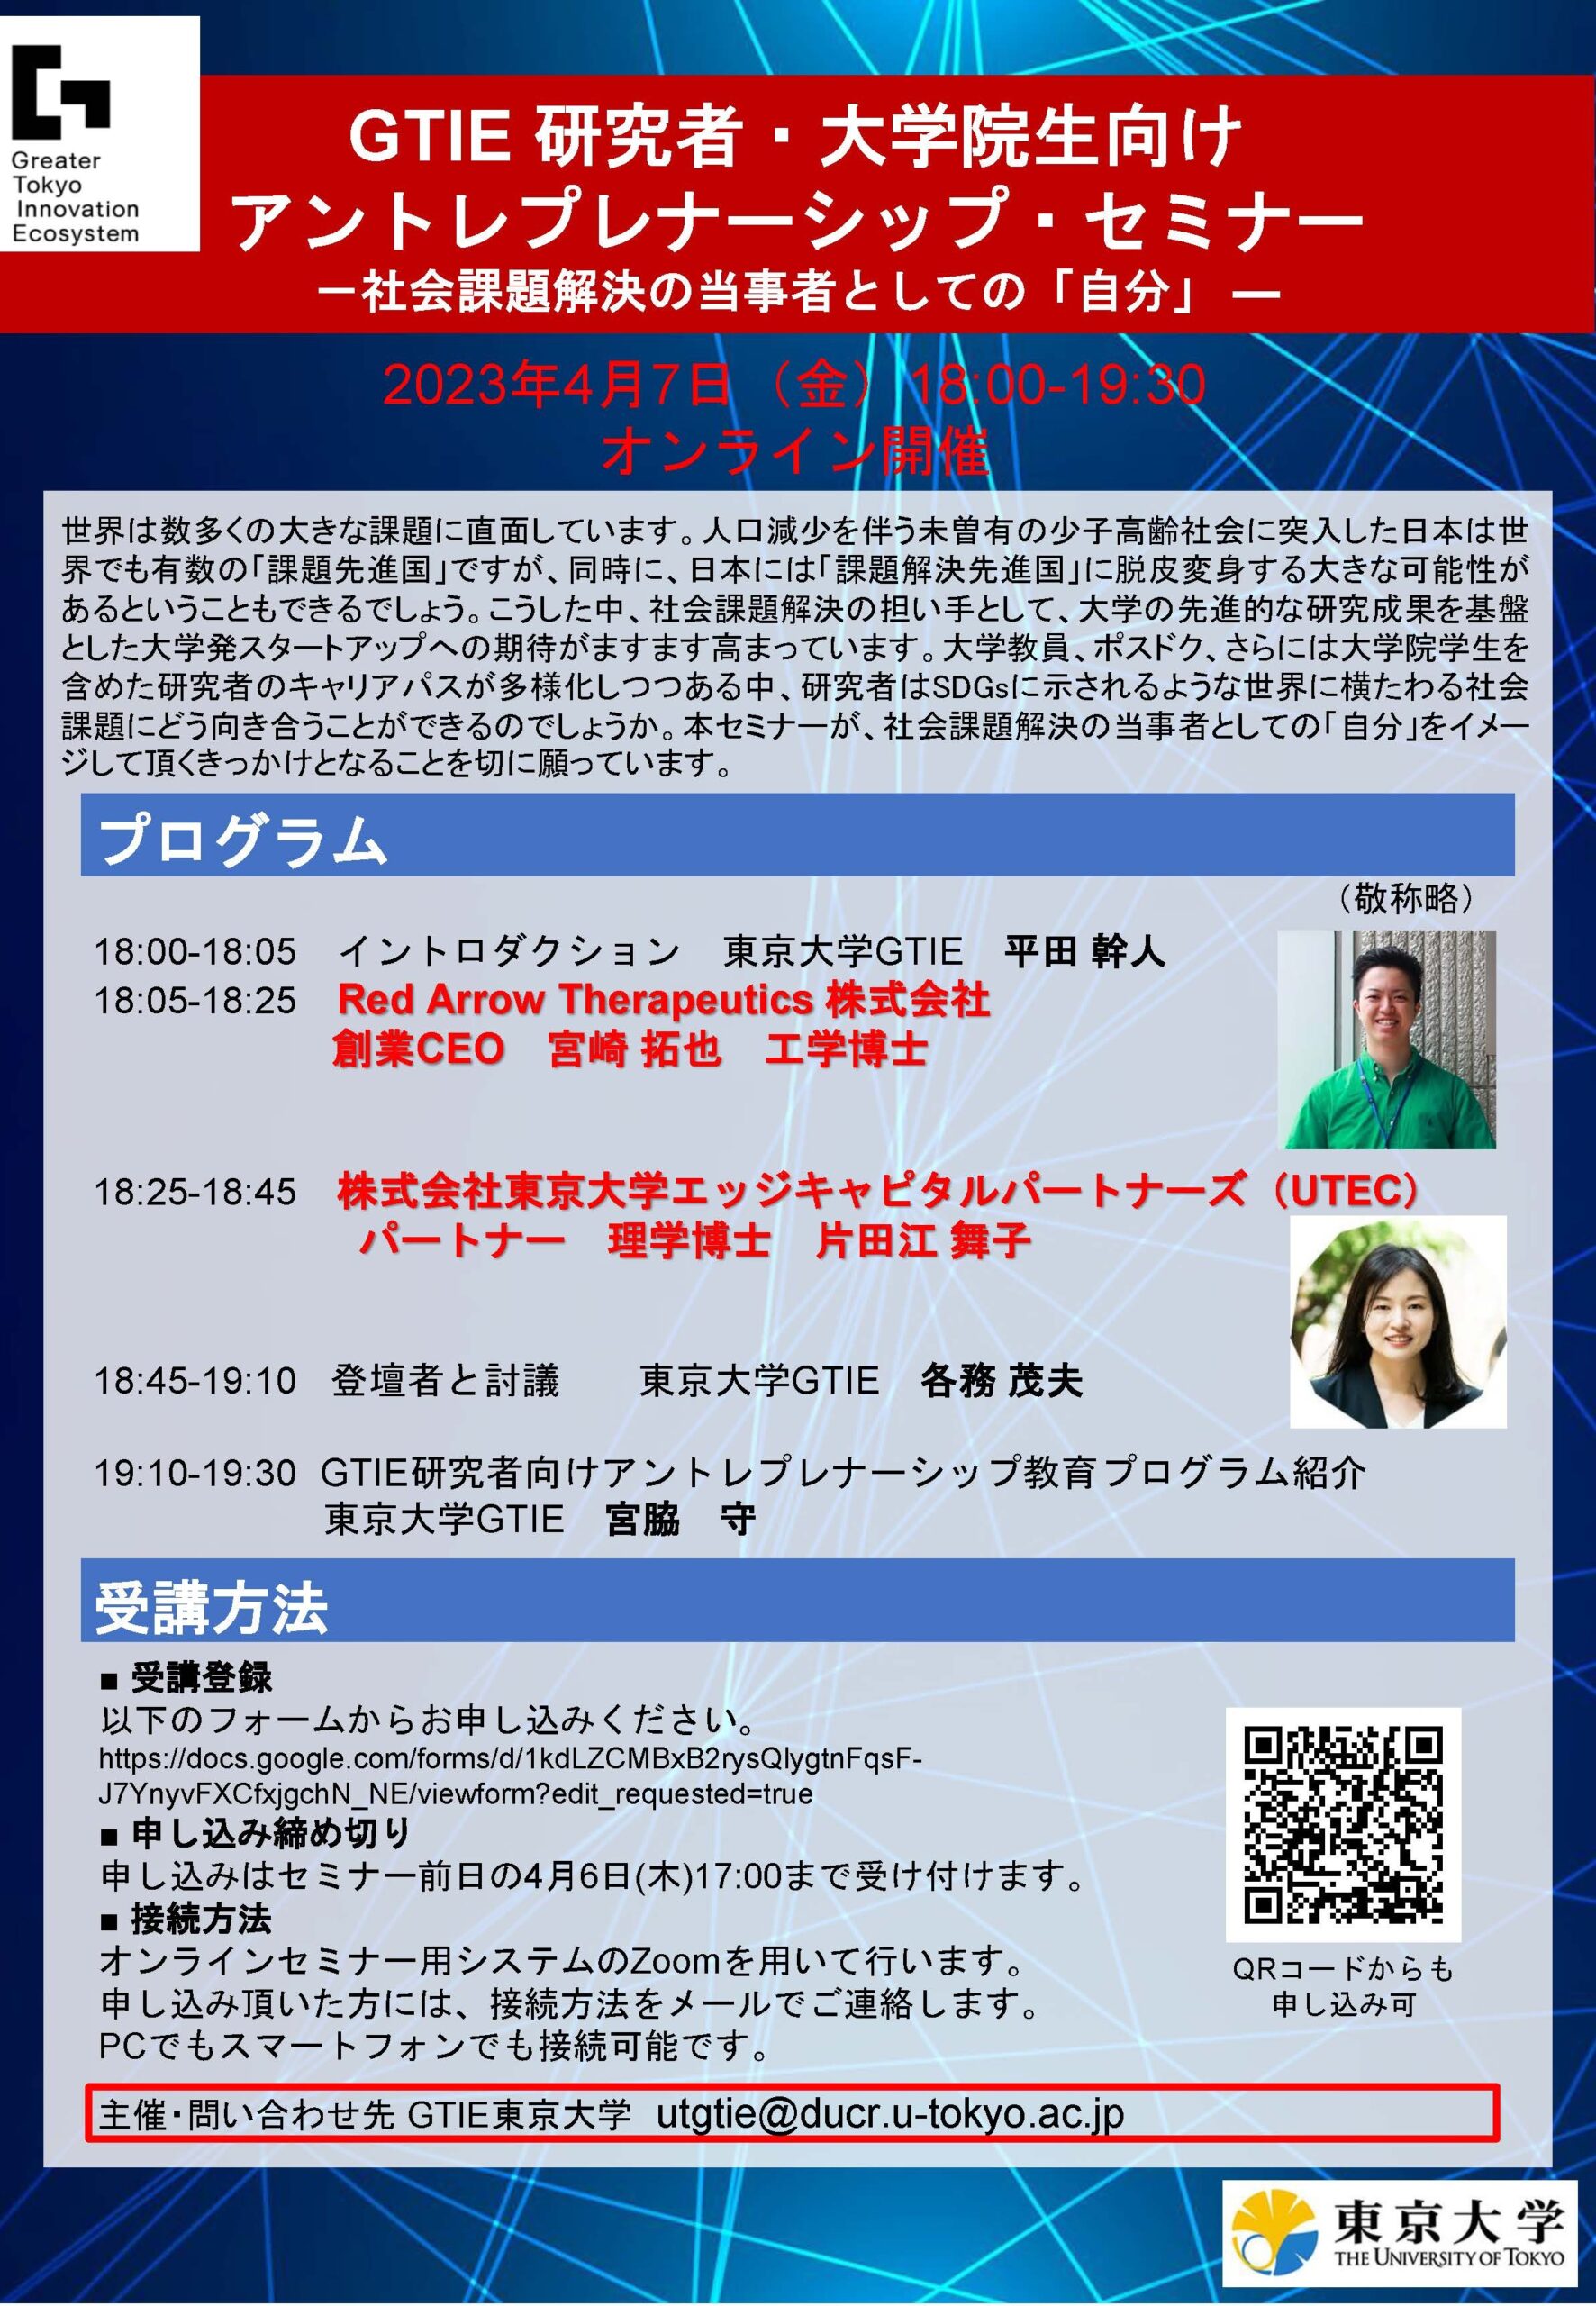 Entrepreneurship Seminar for GTIE Researchers and Graduate Students